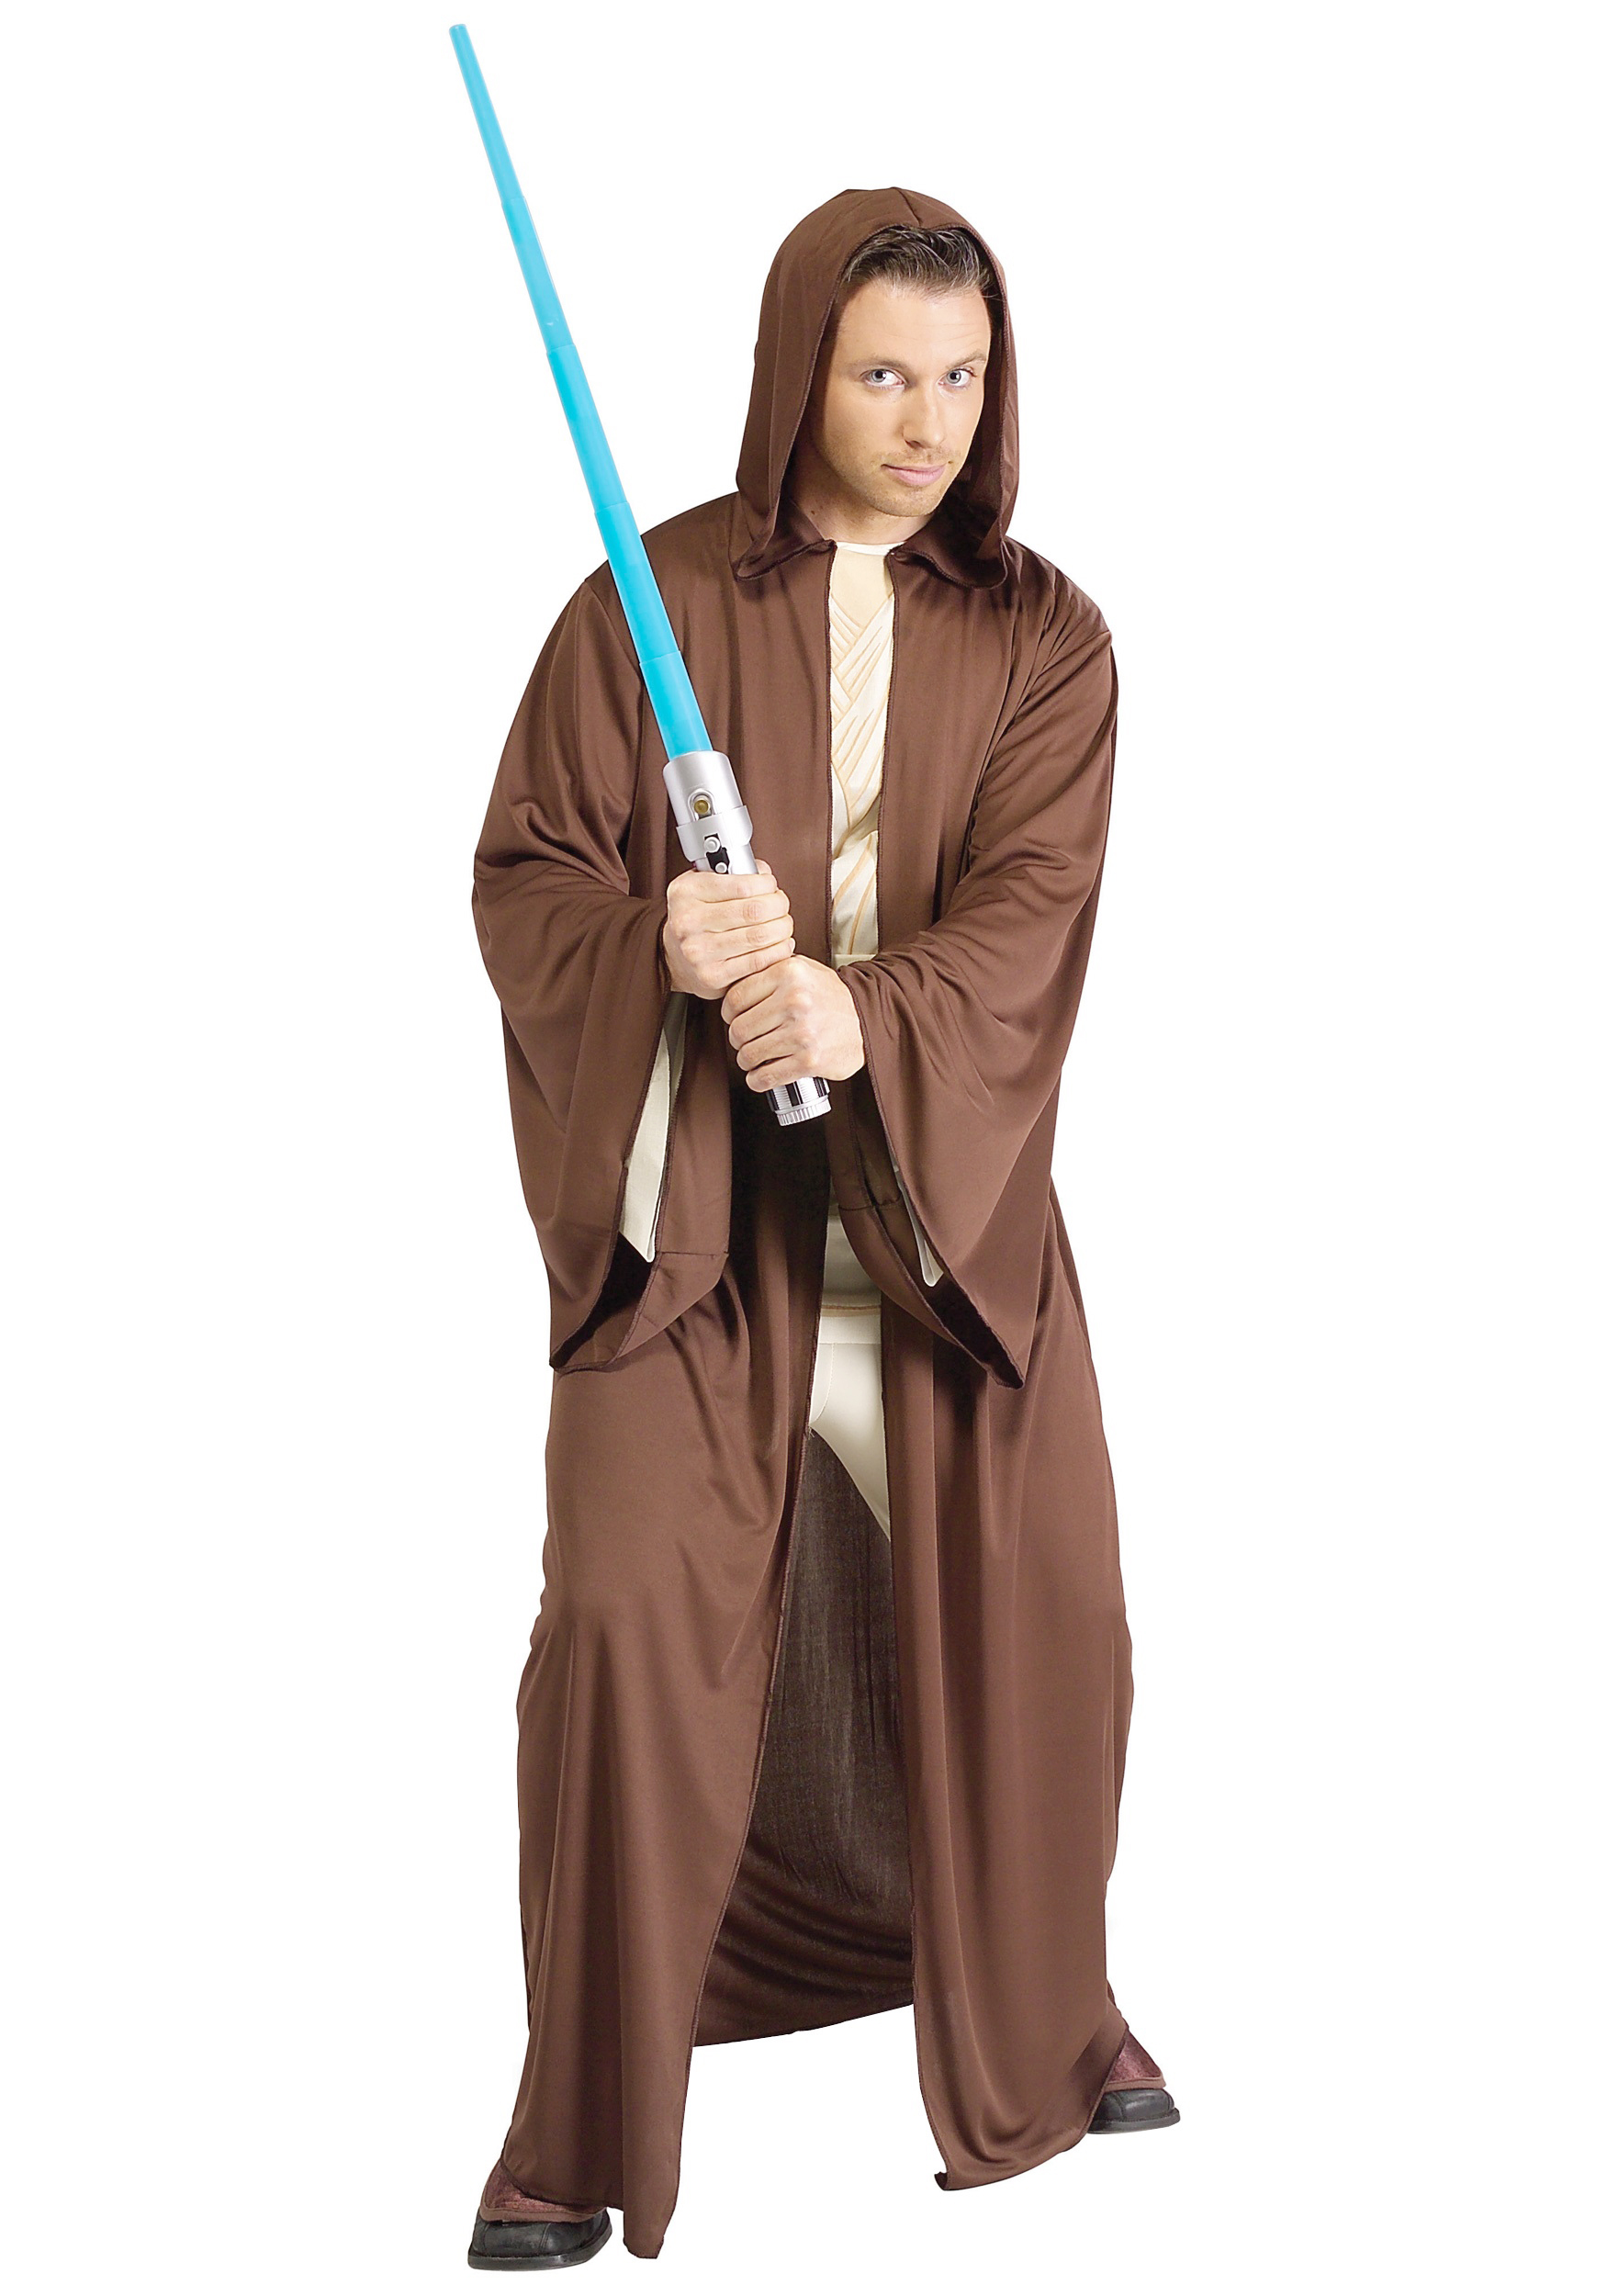 offset regenval Scherm Star Wars Jedi kostuum kopen? Nu €24,95! - FeestinjeBeest.nl